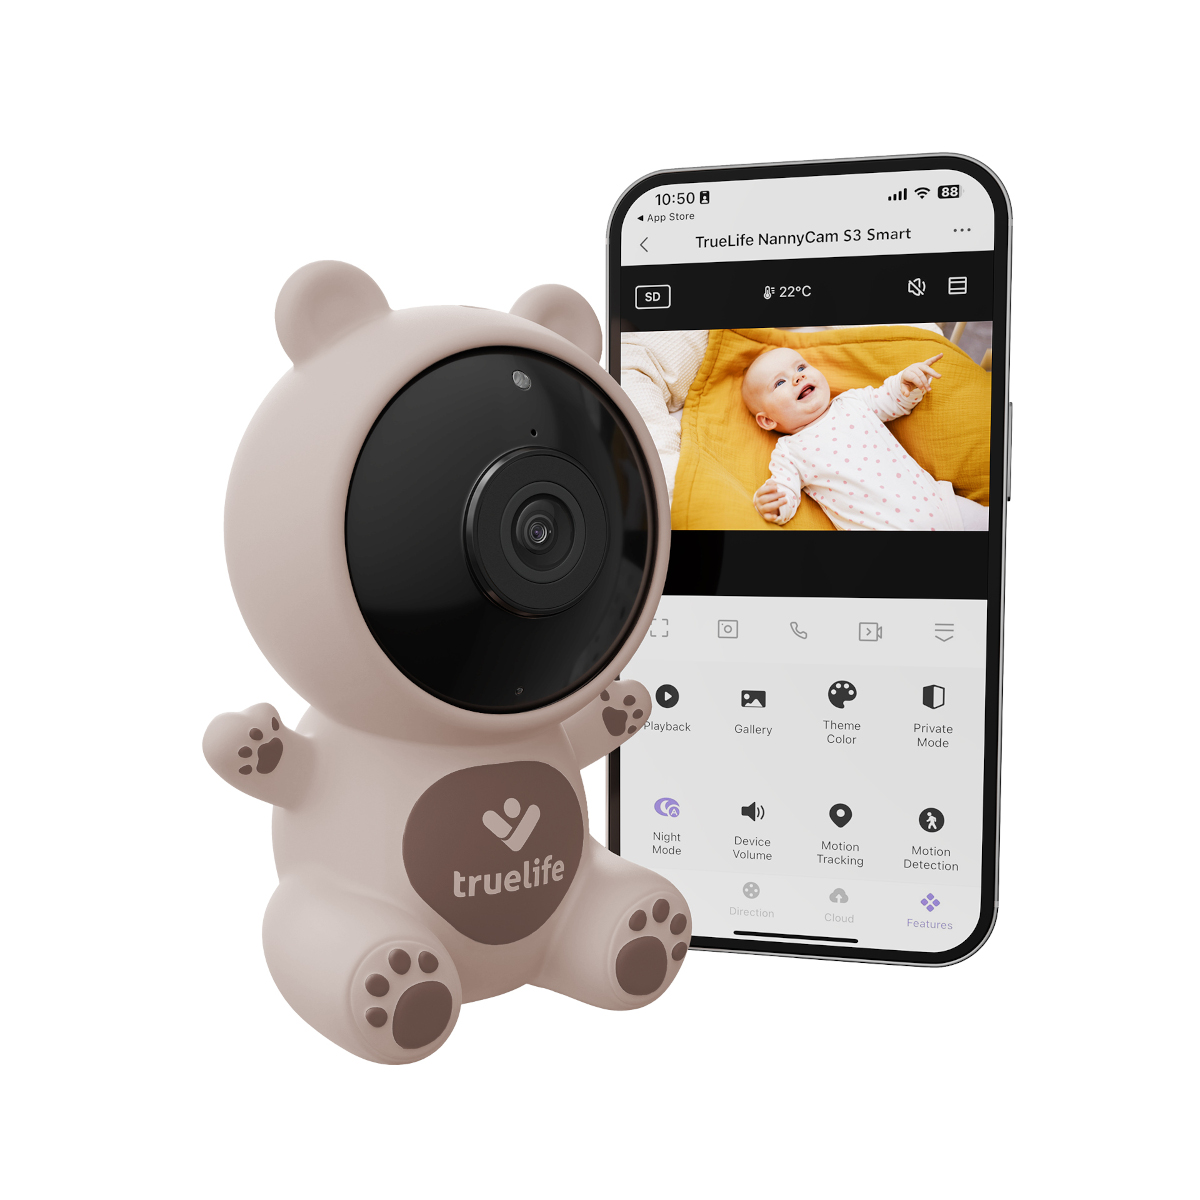 TrueLife NannyCam S3 Smart – medvědí strážce, kterému nic neunikne